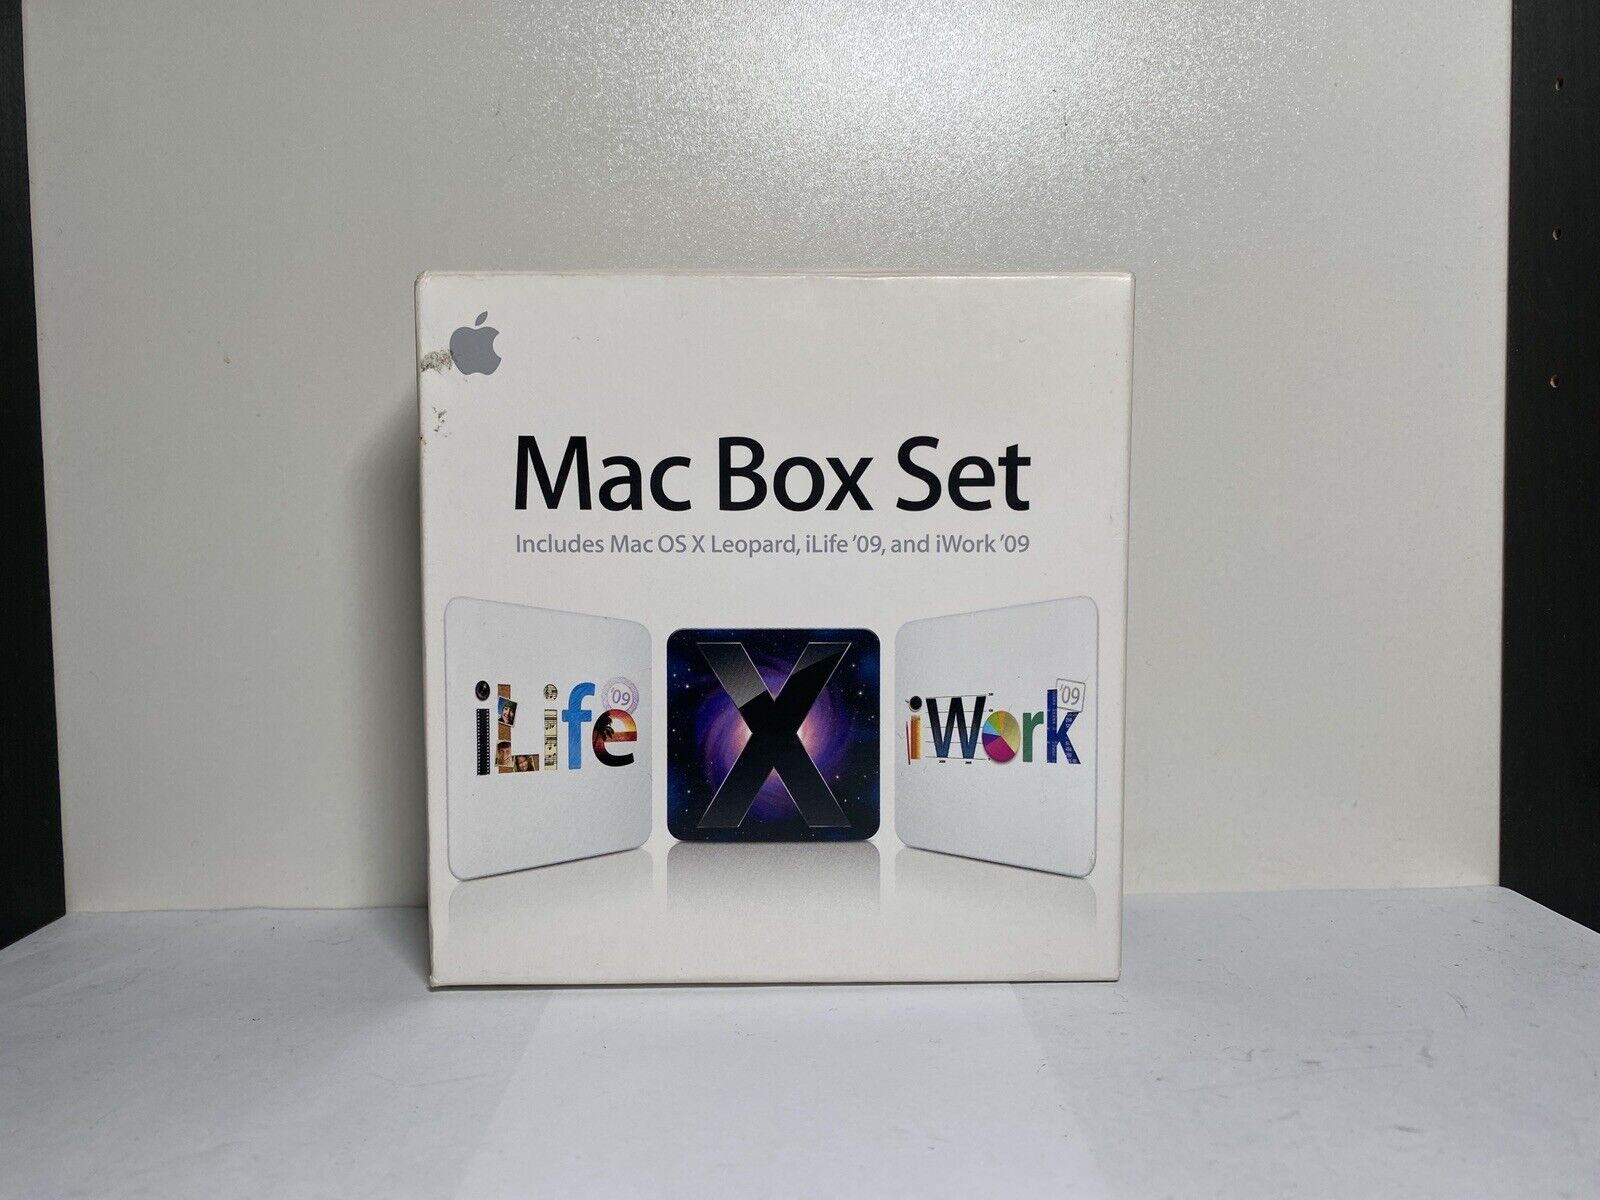 Mac Box Set OS X Leopard 10.5.6 iLife 09 iWork 09, MB997Z/A Complete